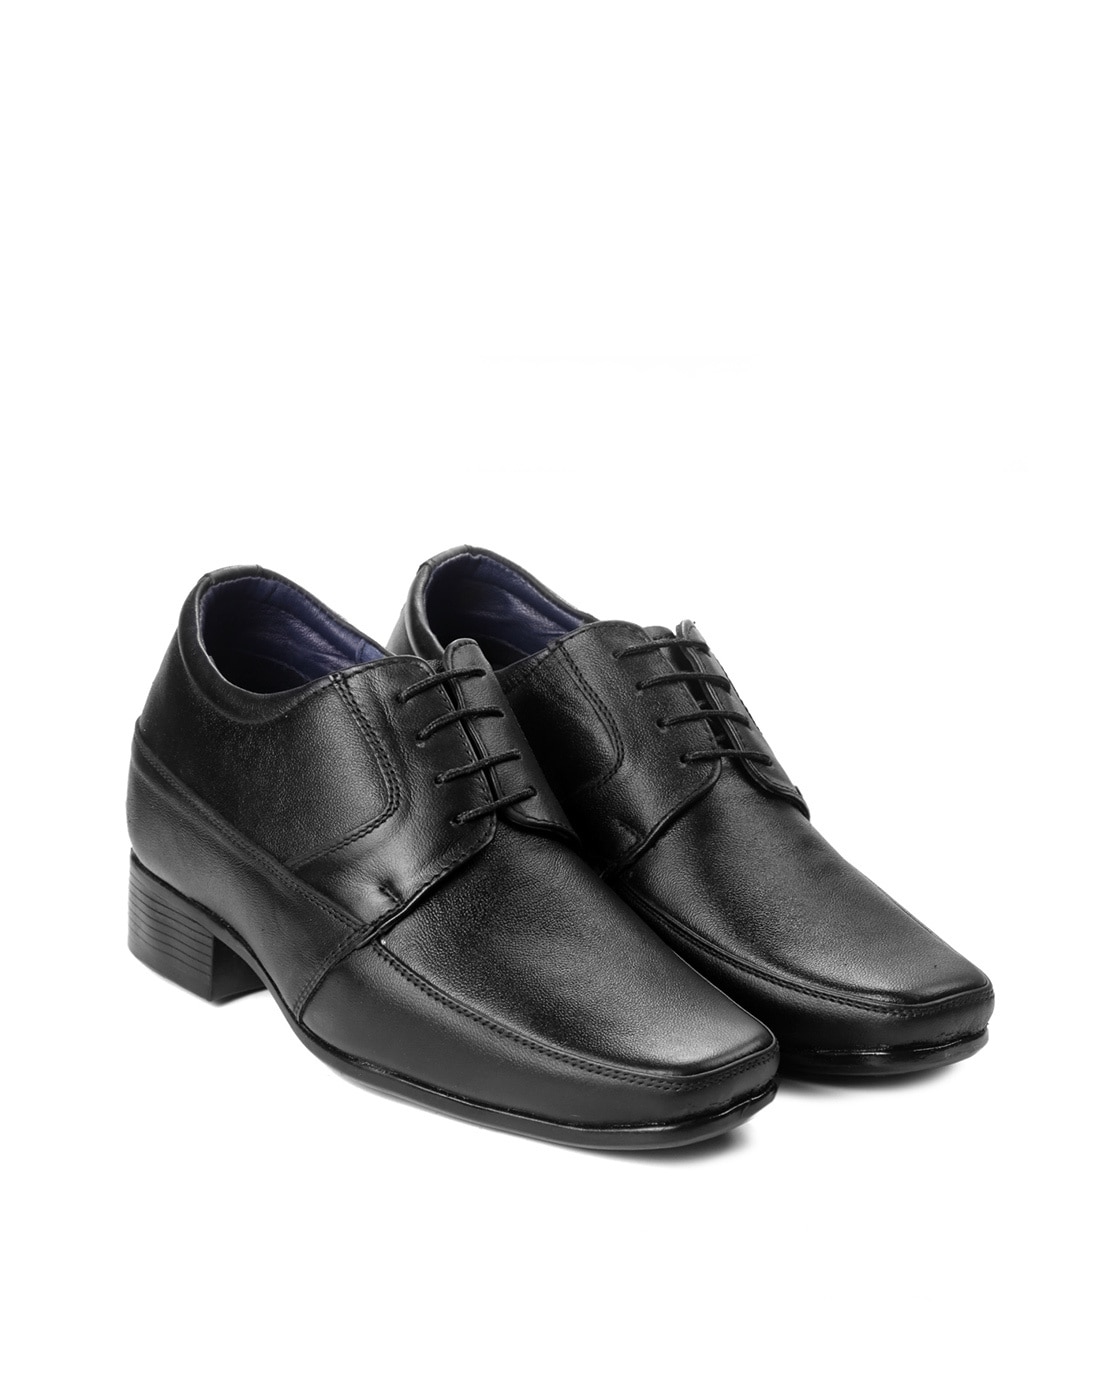 Buy Black Formal Shoes for Men by Clarks Online | Ajio.com